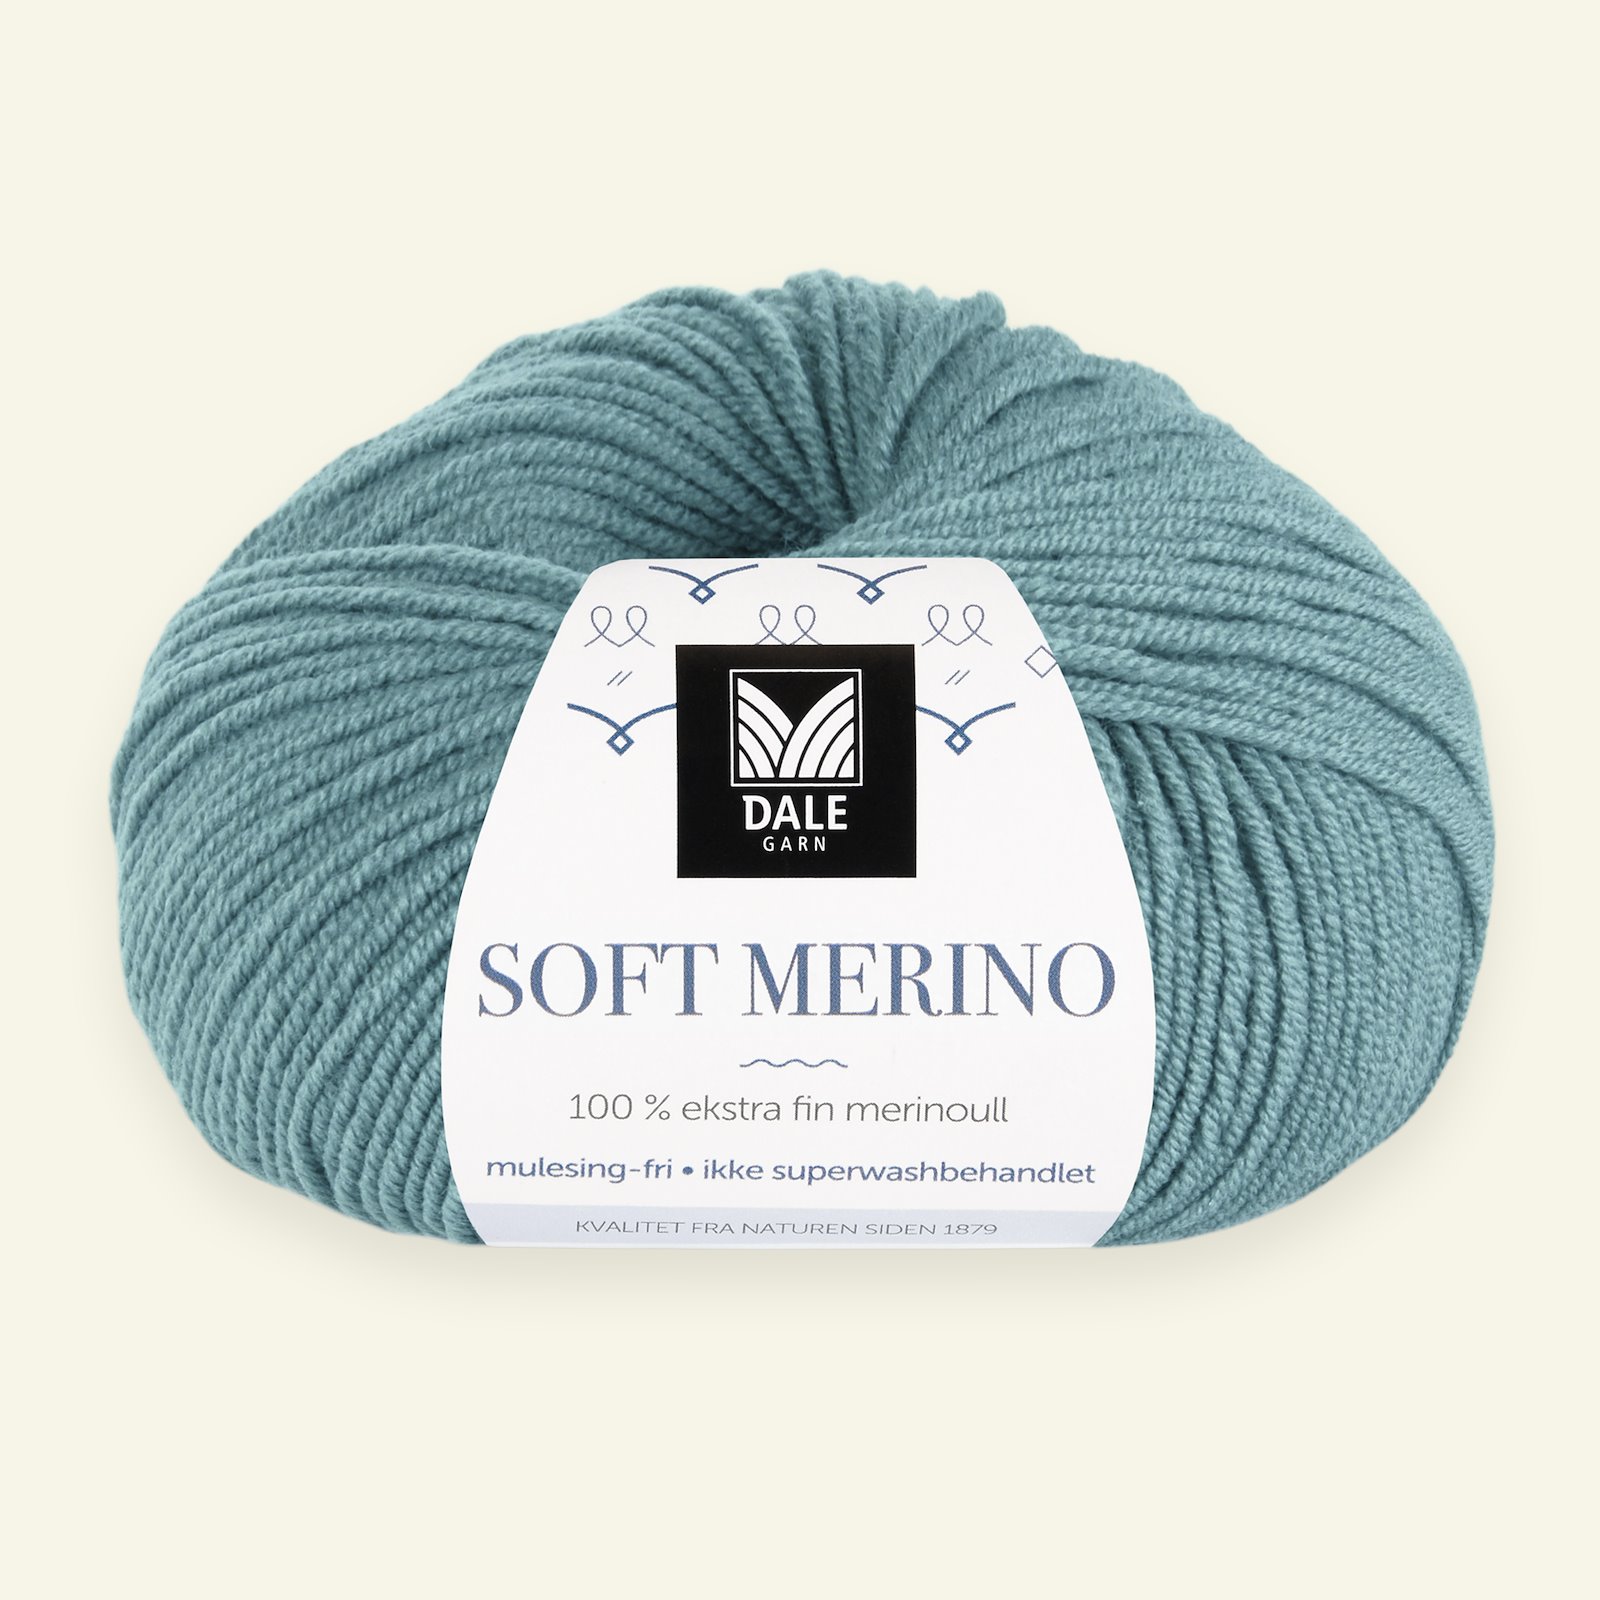 Dale Garn, 100% ekstra fint merinogarn "Soft Merino", aqua (3012) 90000333_pack